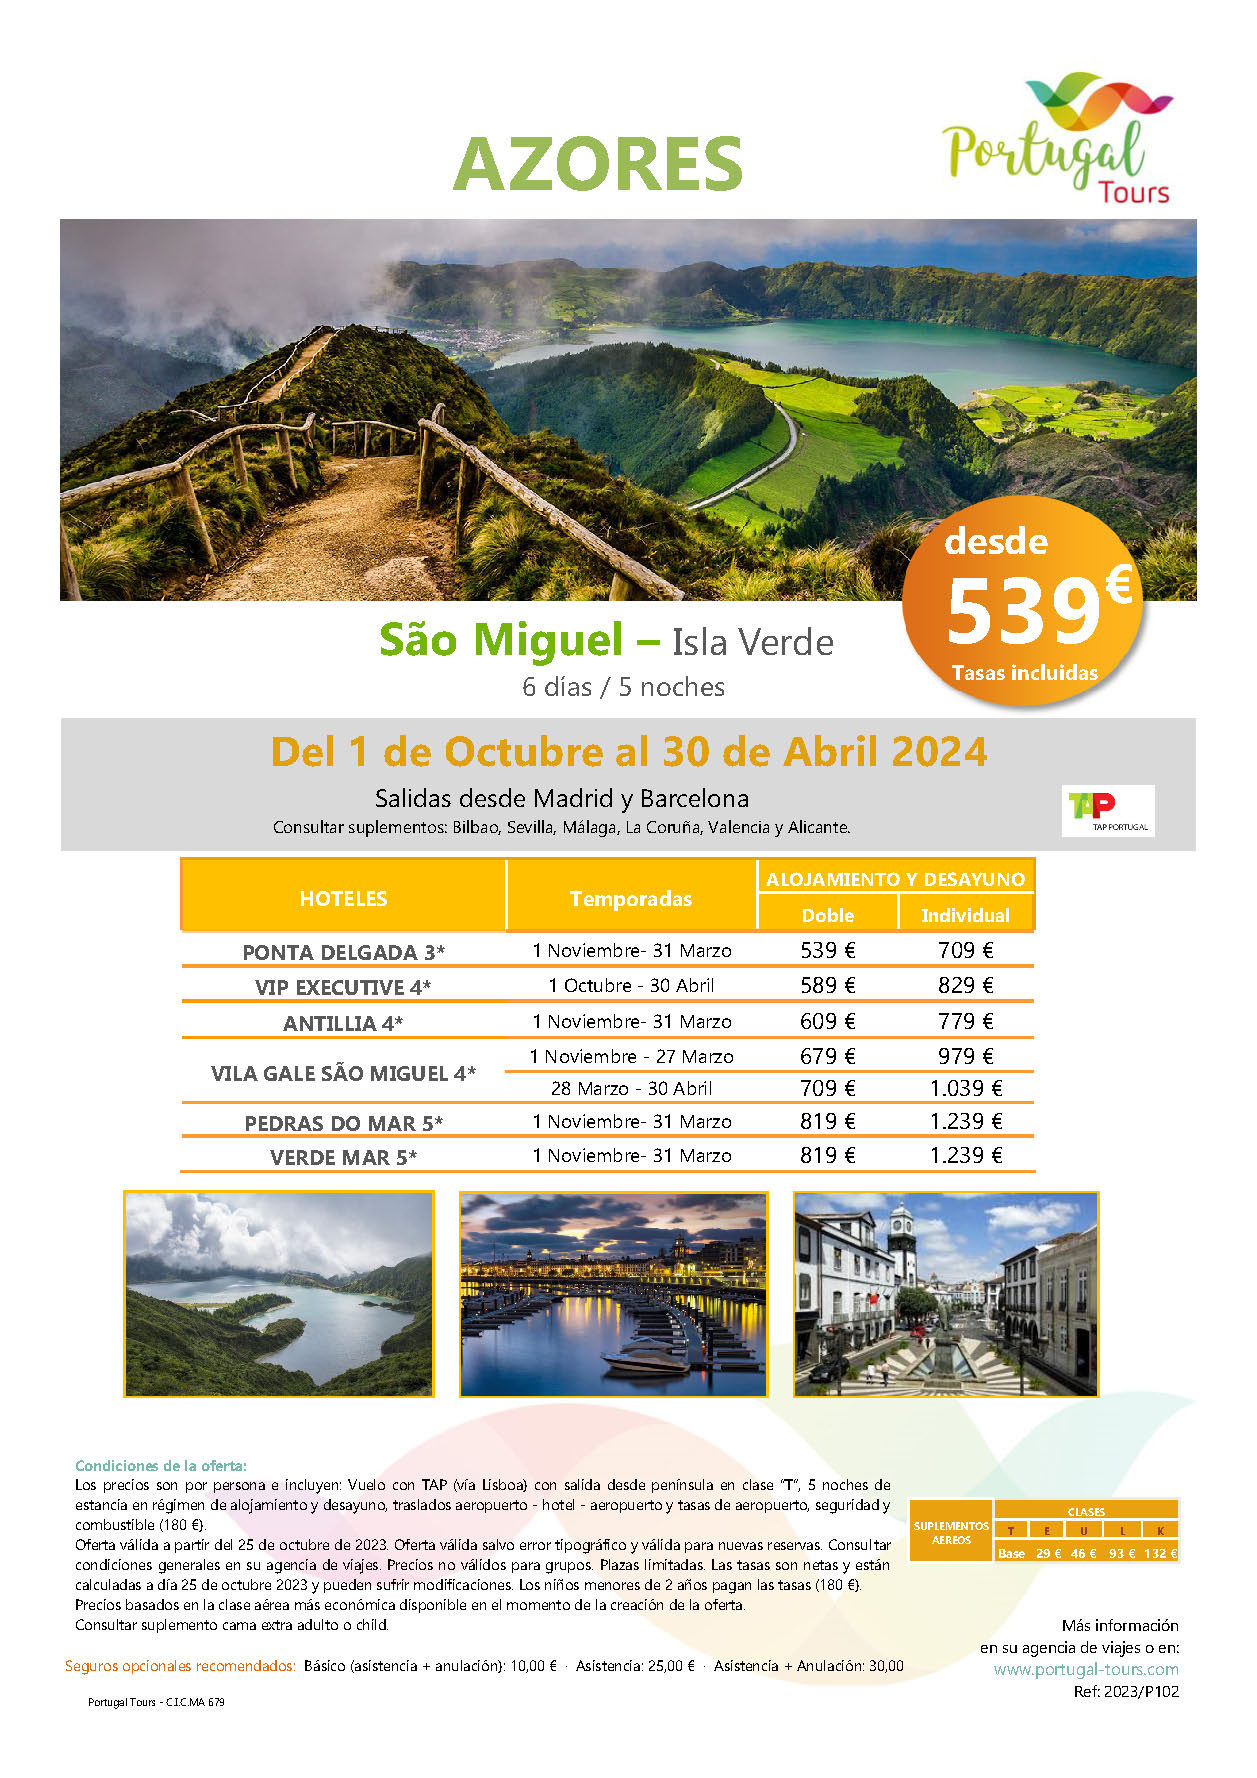 Oferta Portugal Tours Estancia en Sao Miguel Azores 6 dias salidas Primavera 2023 desde Madrid Barcelona Bilbao Valencia Malaga